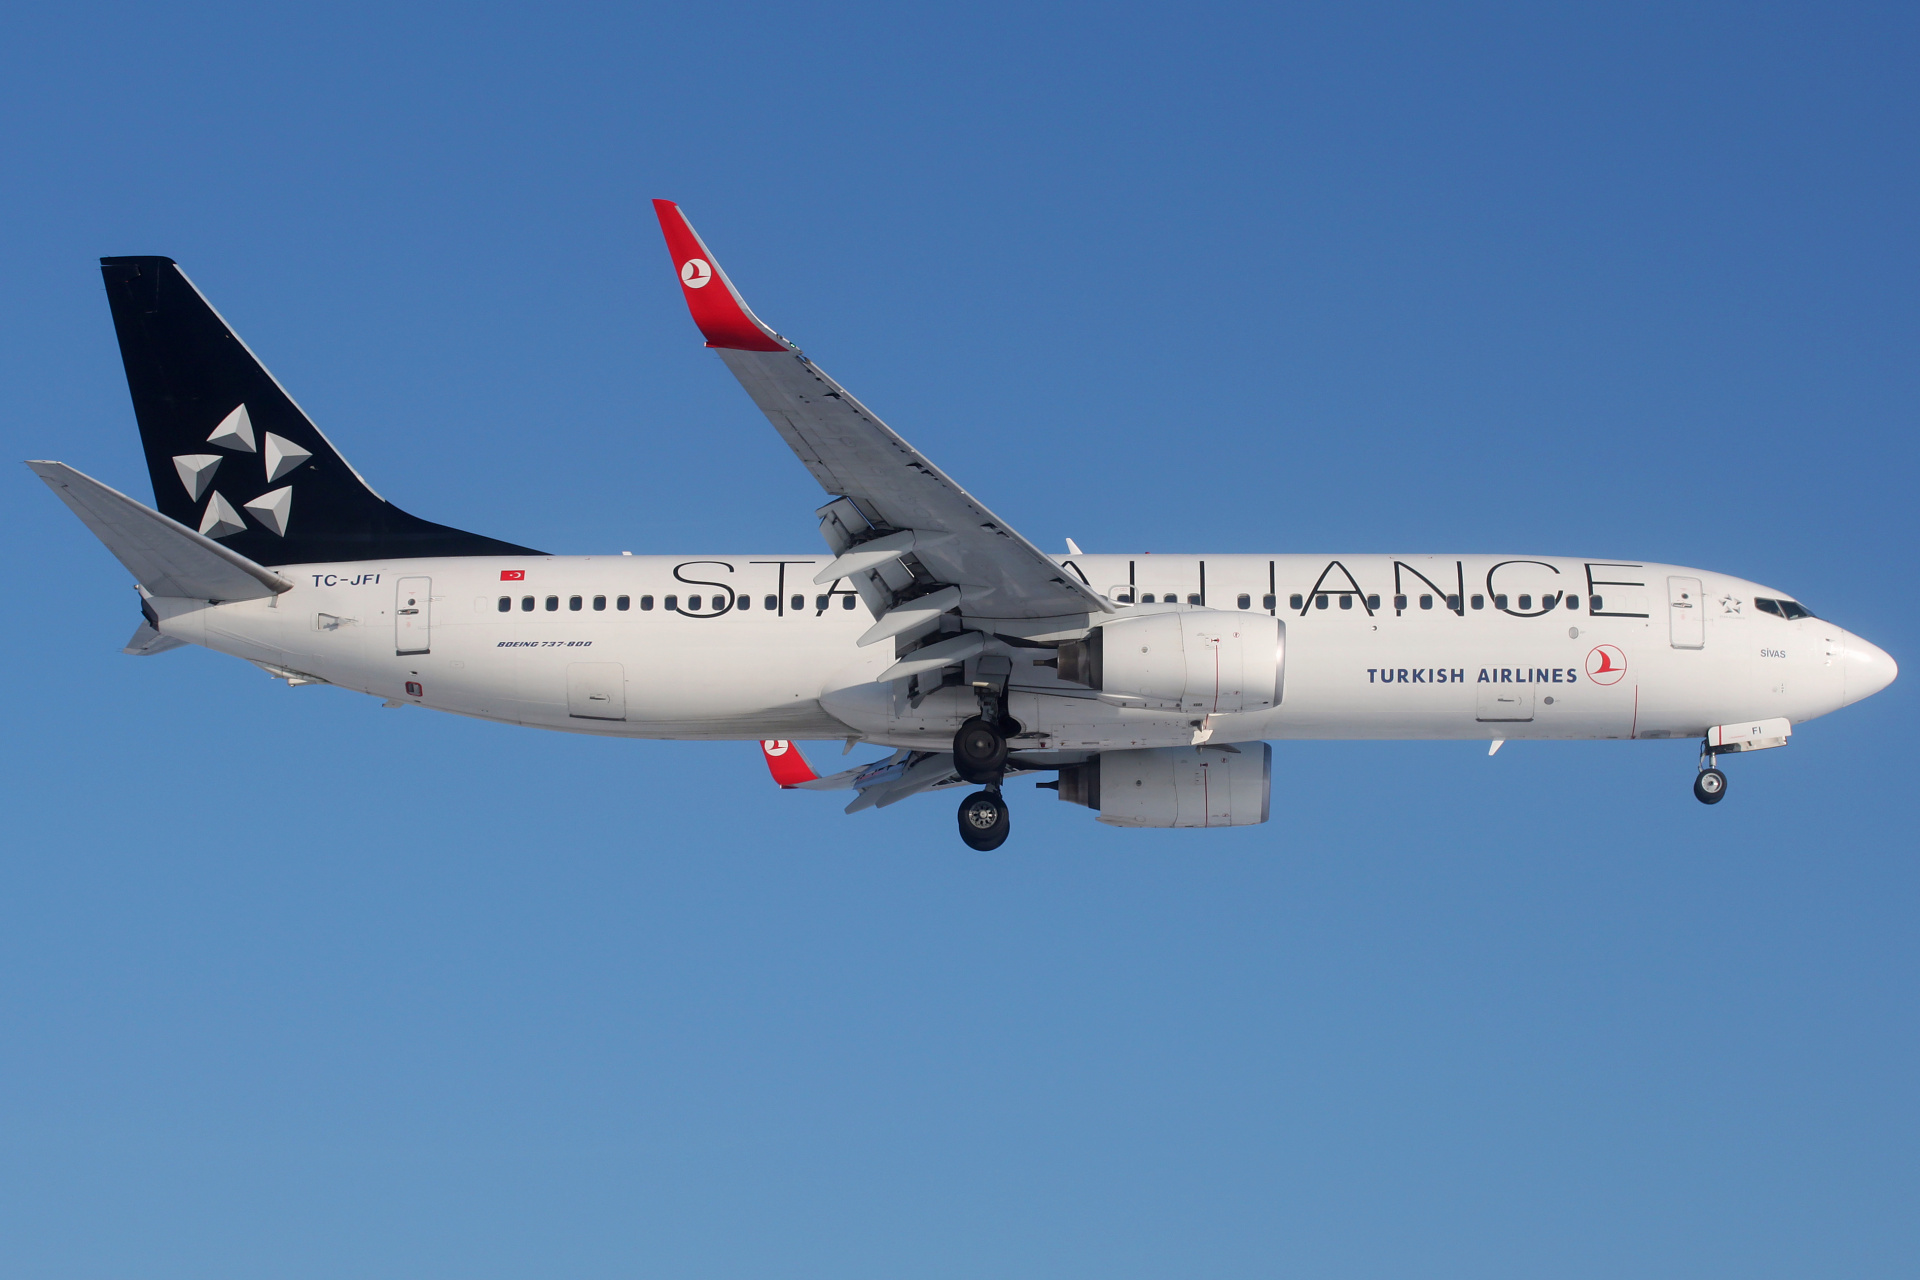 TC-JFI (Star Alliance livery) (Aircraft » EPWA Spotting » Boeing 737-800 » THY Turkish Airlines)